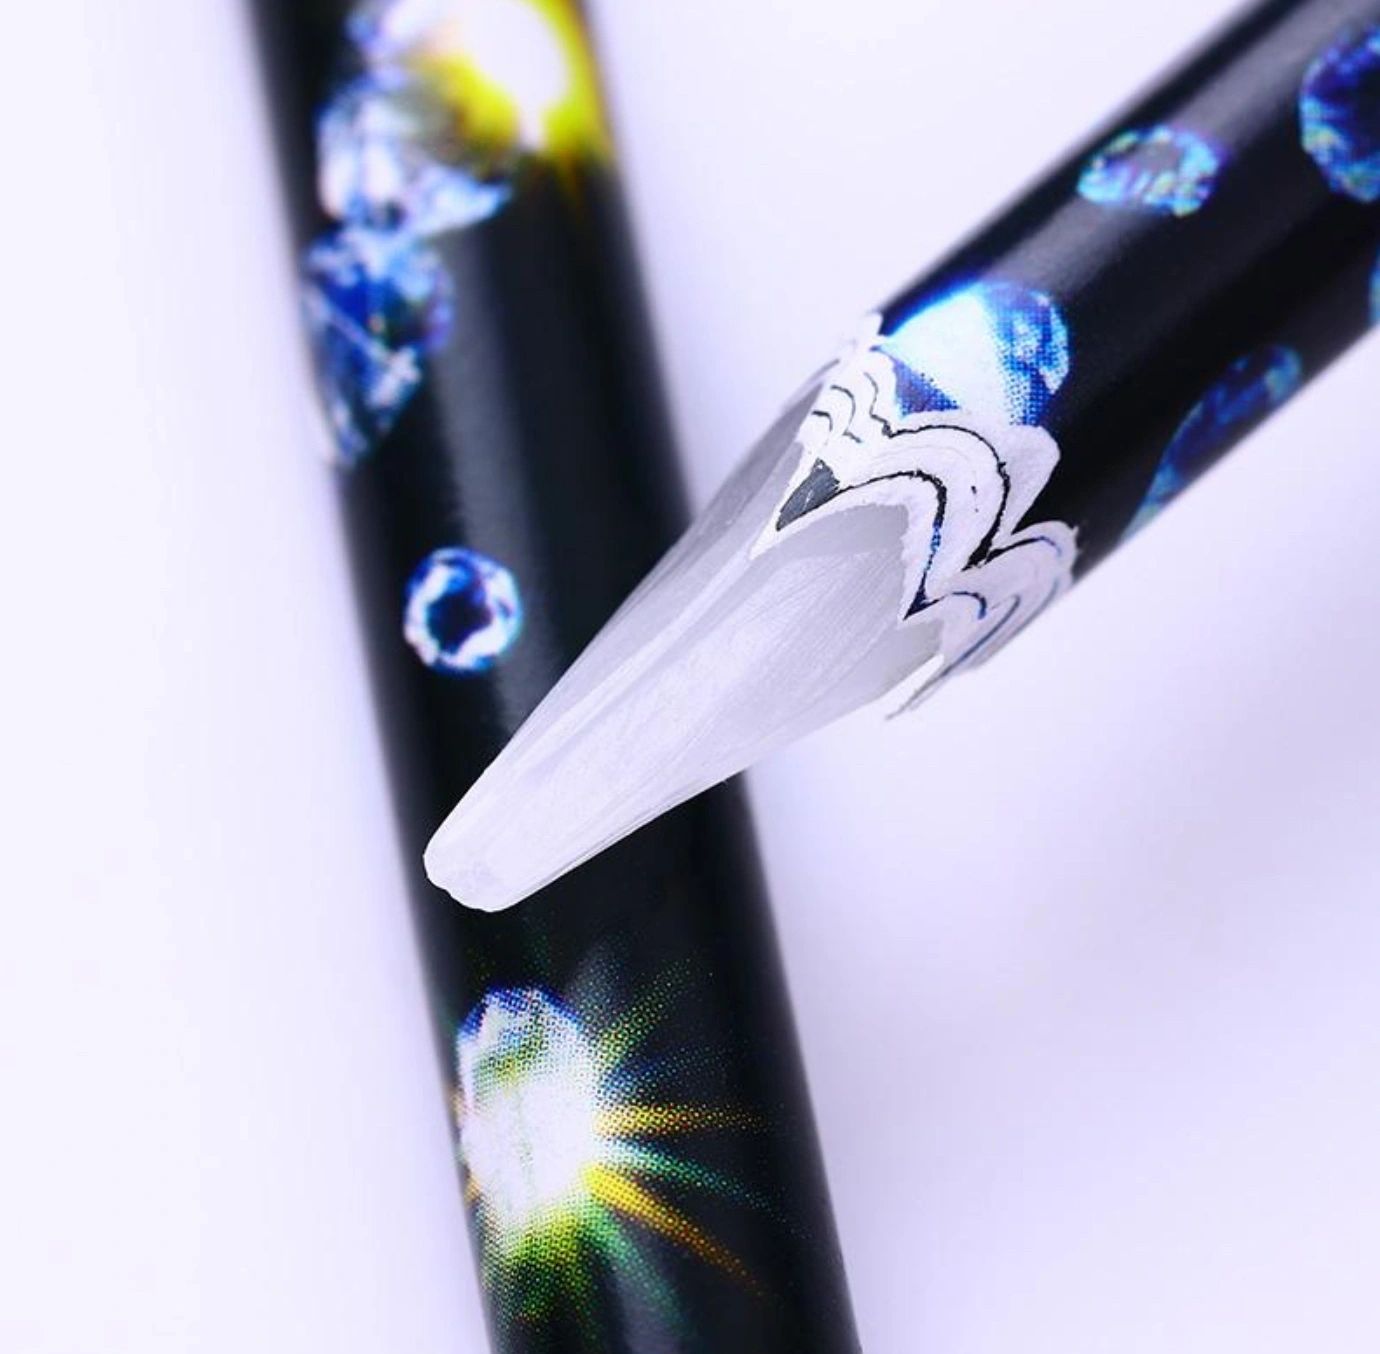 WAX Diamond Painting Pencil / Pick-Me-Up Applicator